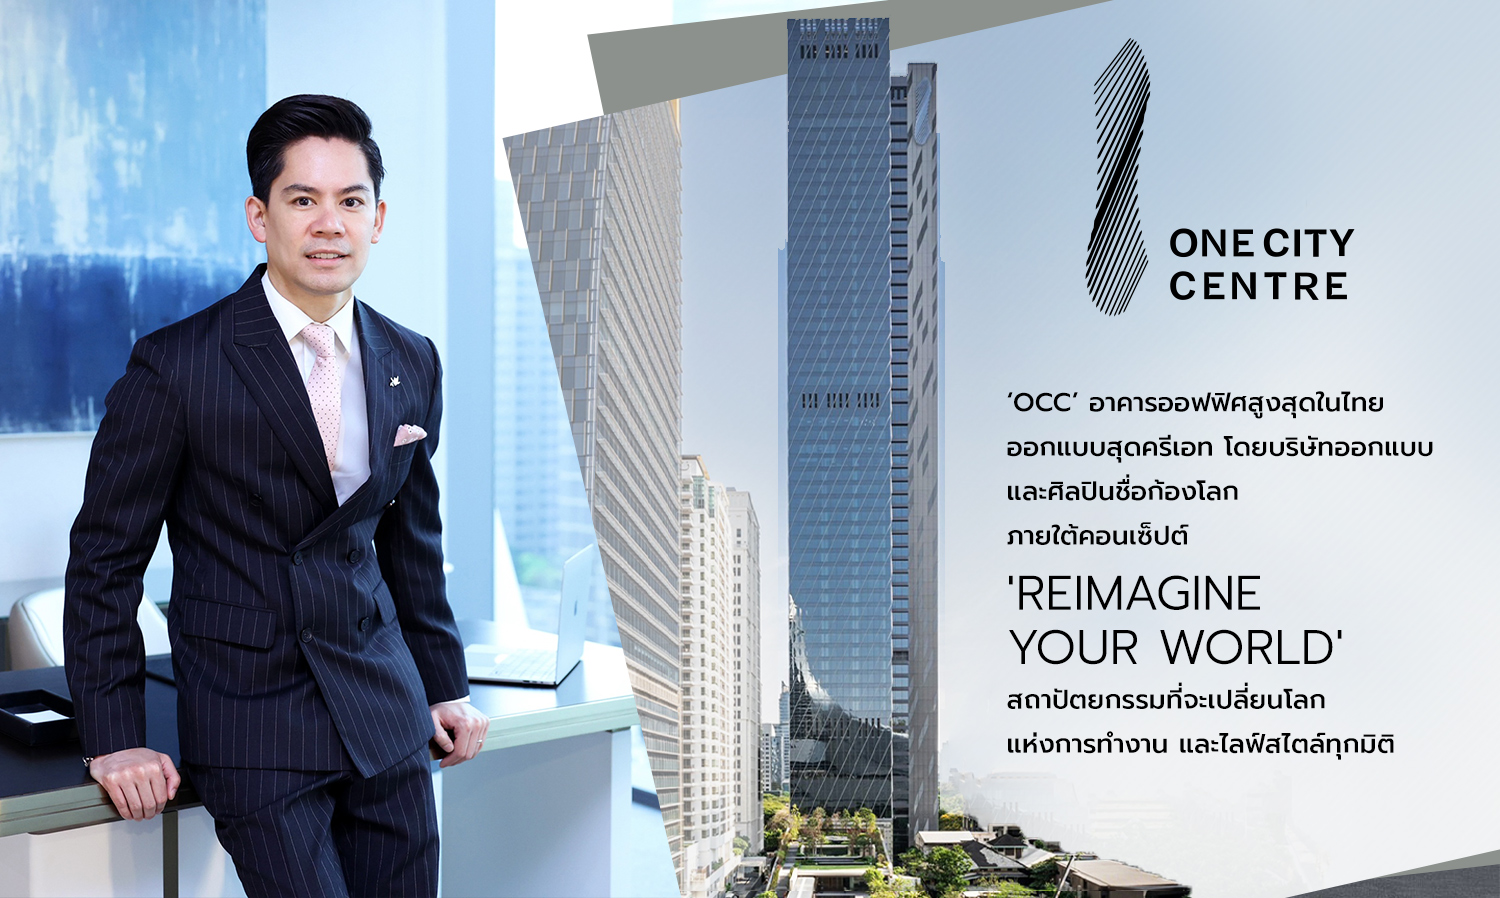 OCC อาคารออฟฟิศสูงสุดในไทย ออกแบบสุดครีเอท โดยบริษัทออกแบบและศิลปินชื่อก้องโลก  ภายใต้คอนเซ็ปต์ REIMAGINE YOUR WORLD สถาปัตยกรรมที่จะเปลี่ยนโลกแห่งการทำงานและไลฟ์สไตล์ทุกมิติ 